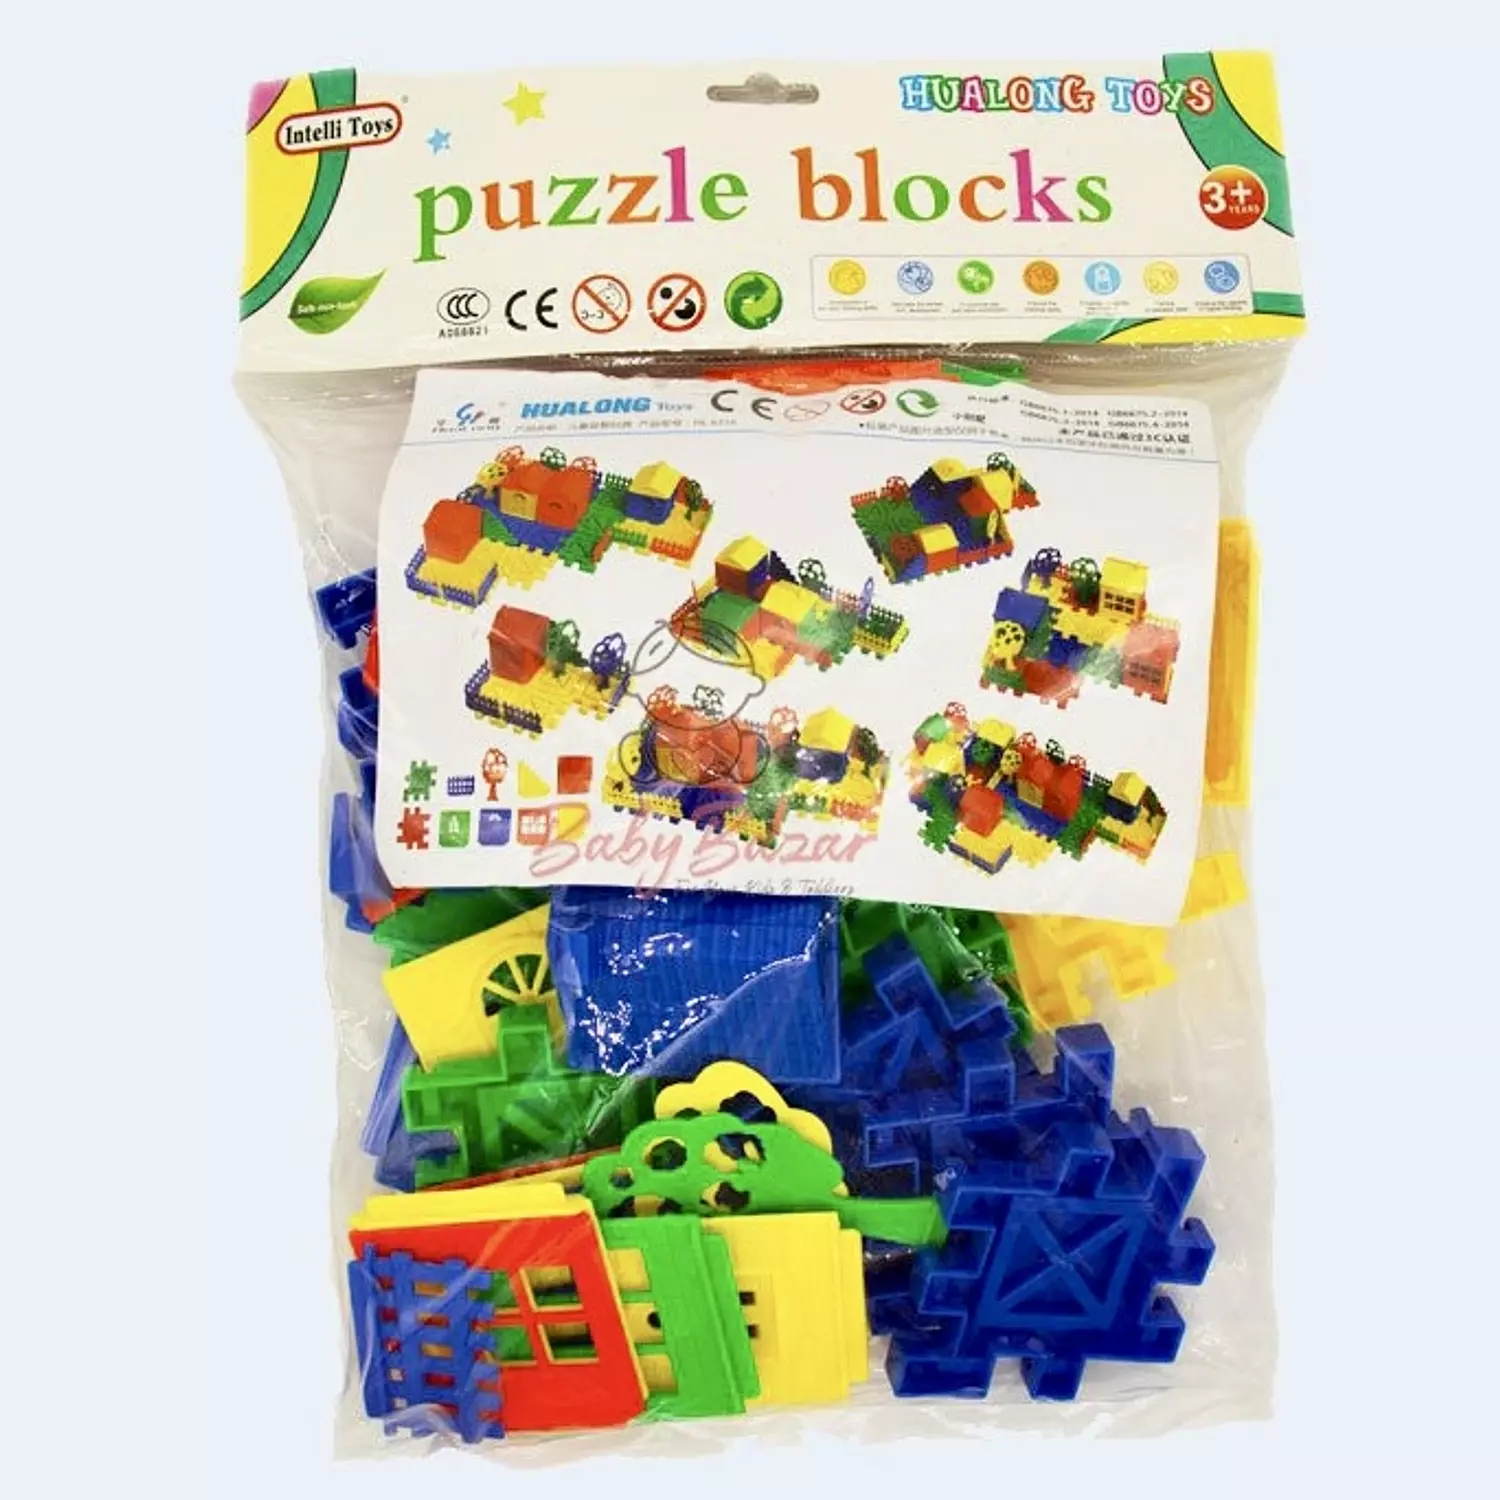 Puzzle Blocks hover image